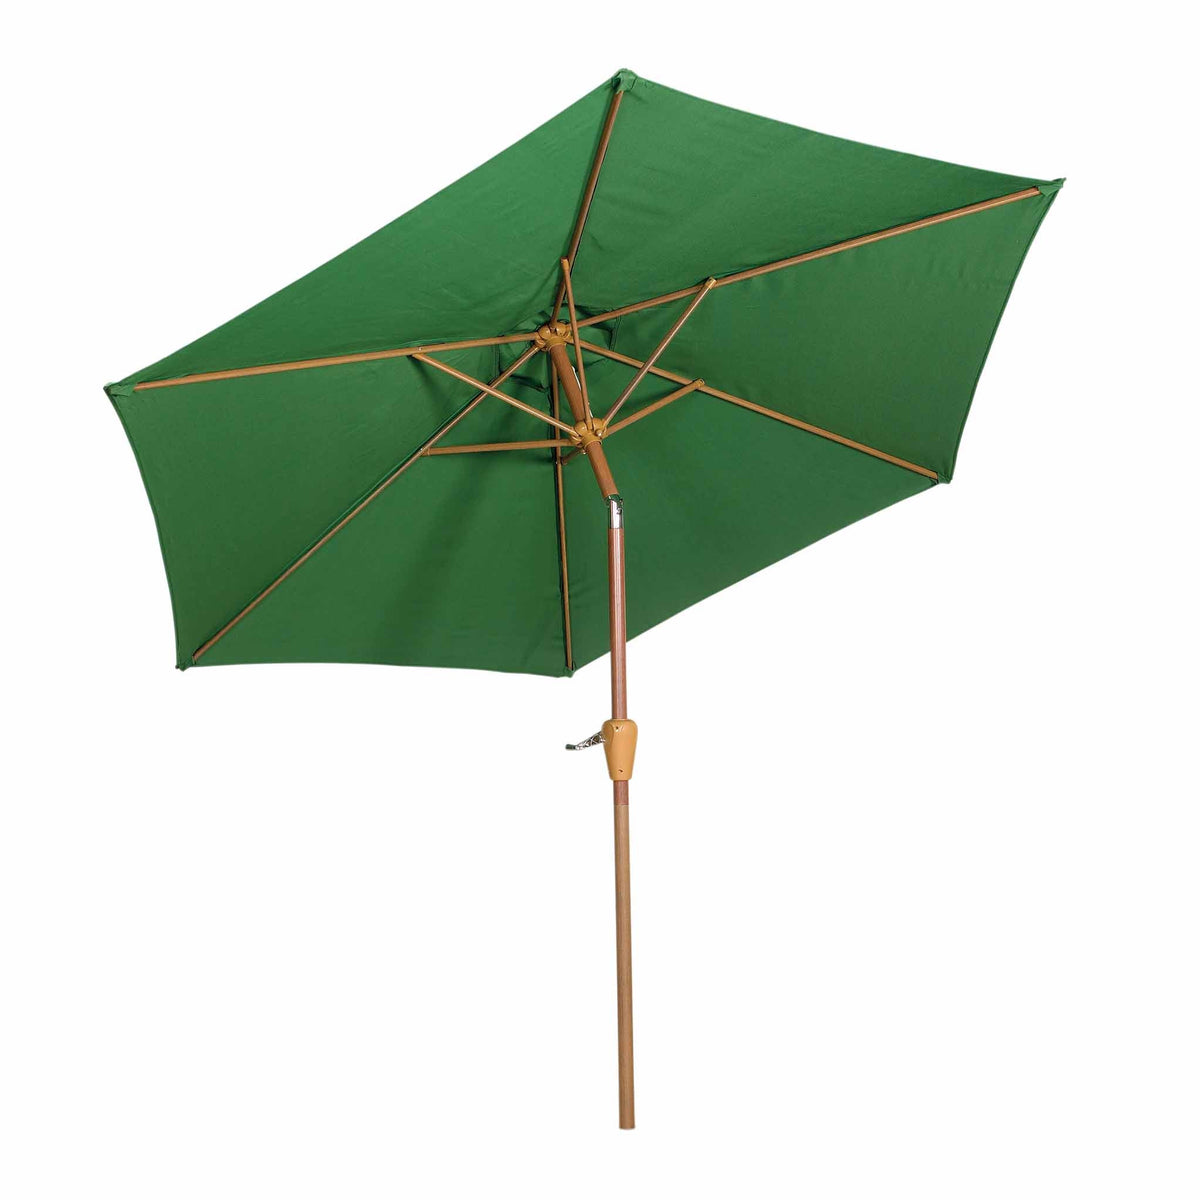 2.5m Green Crank & Tilt Garden Umbrella with Wood Look Frame